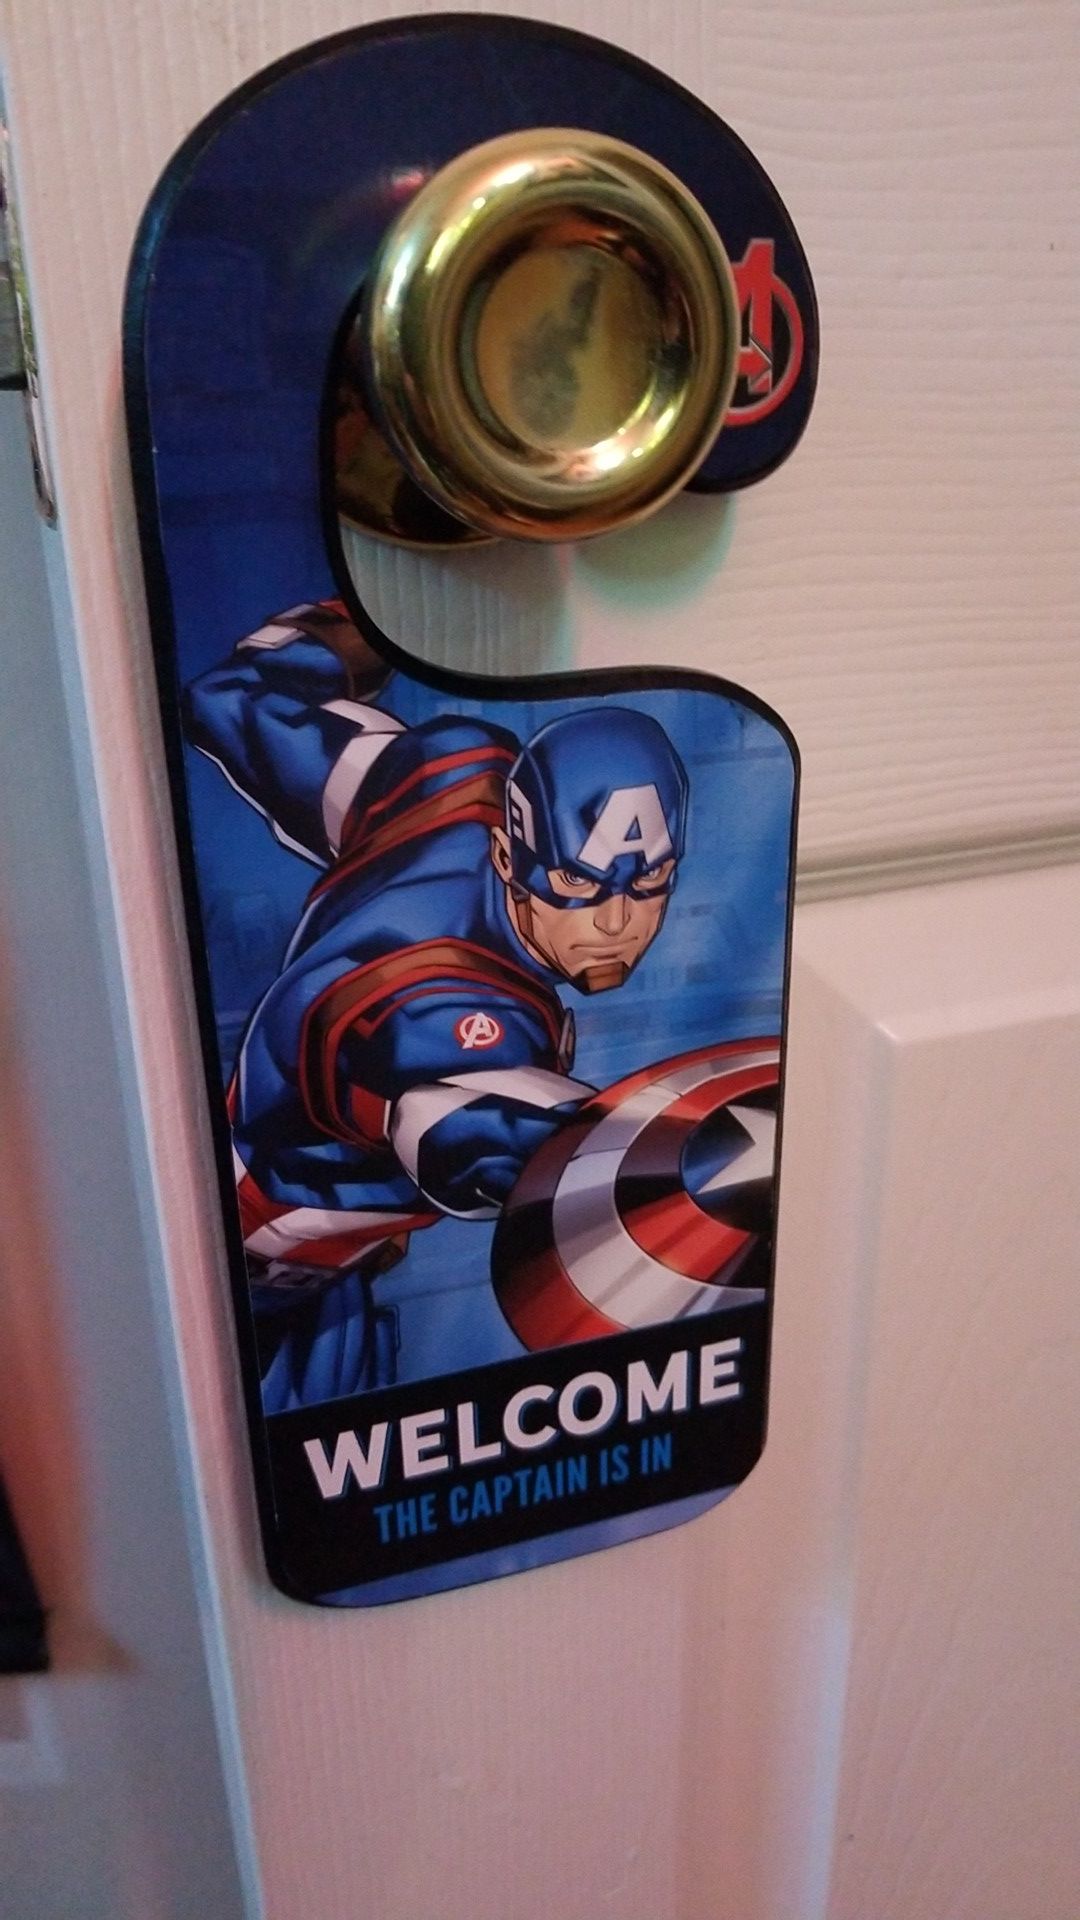 Marvel avengers captain America & iron man doorhanger